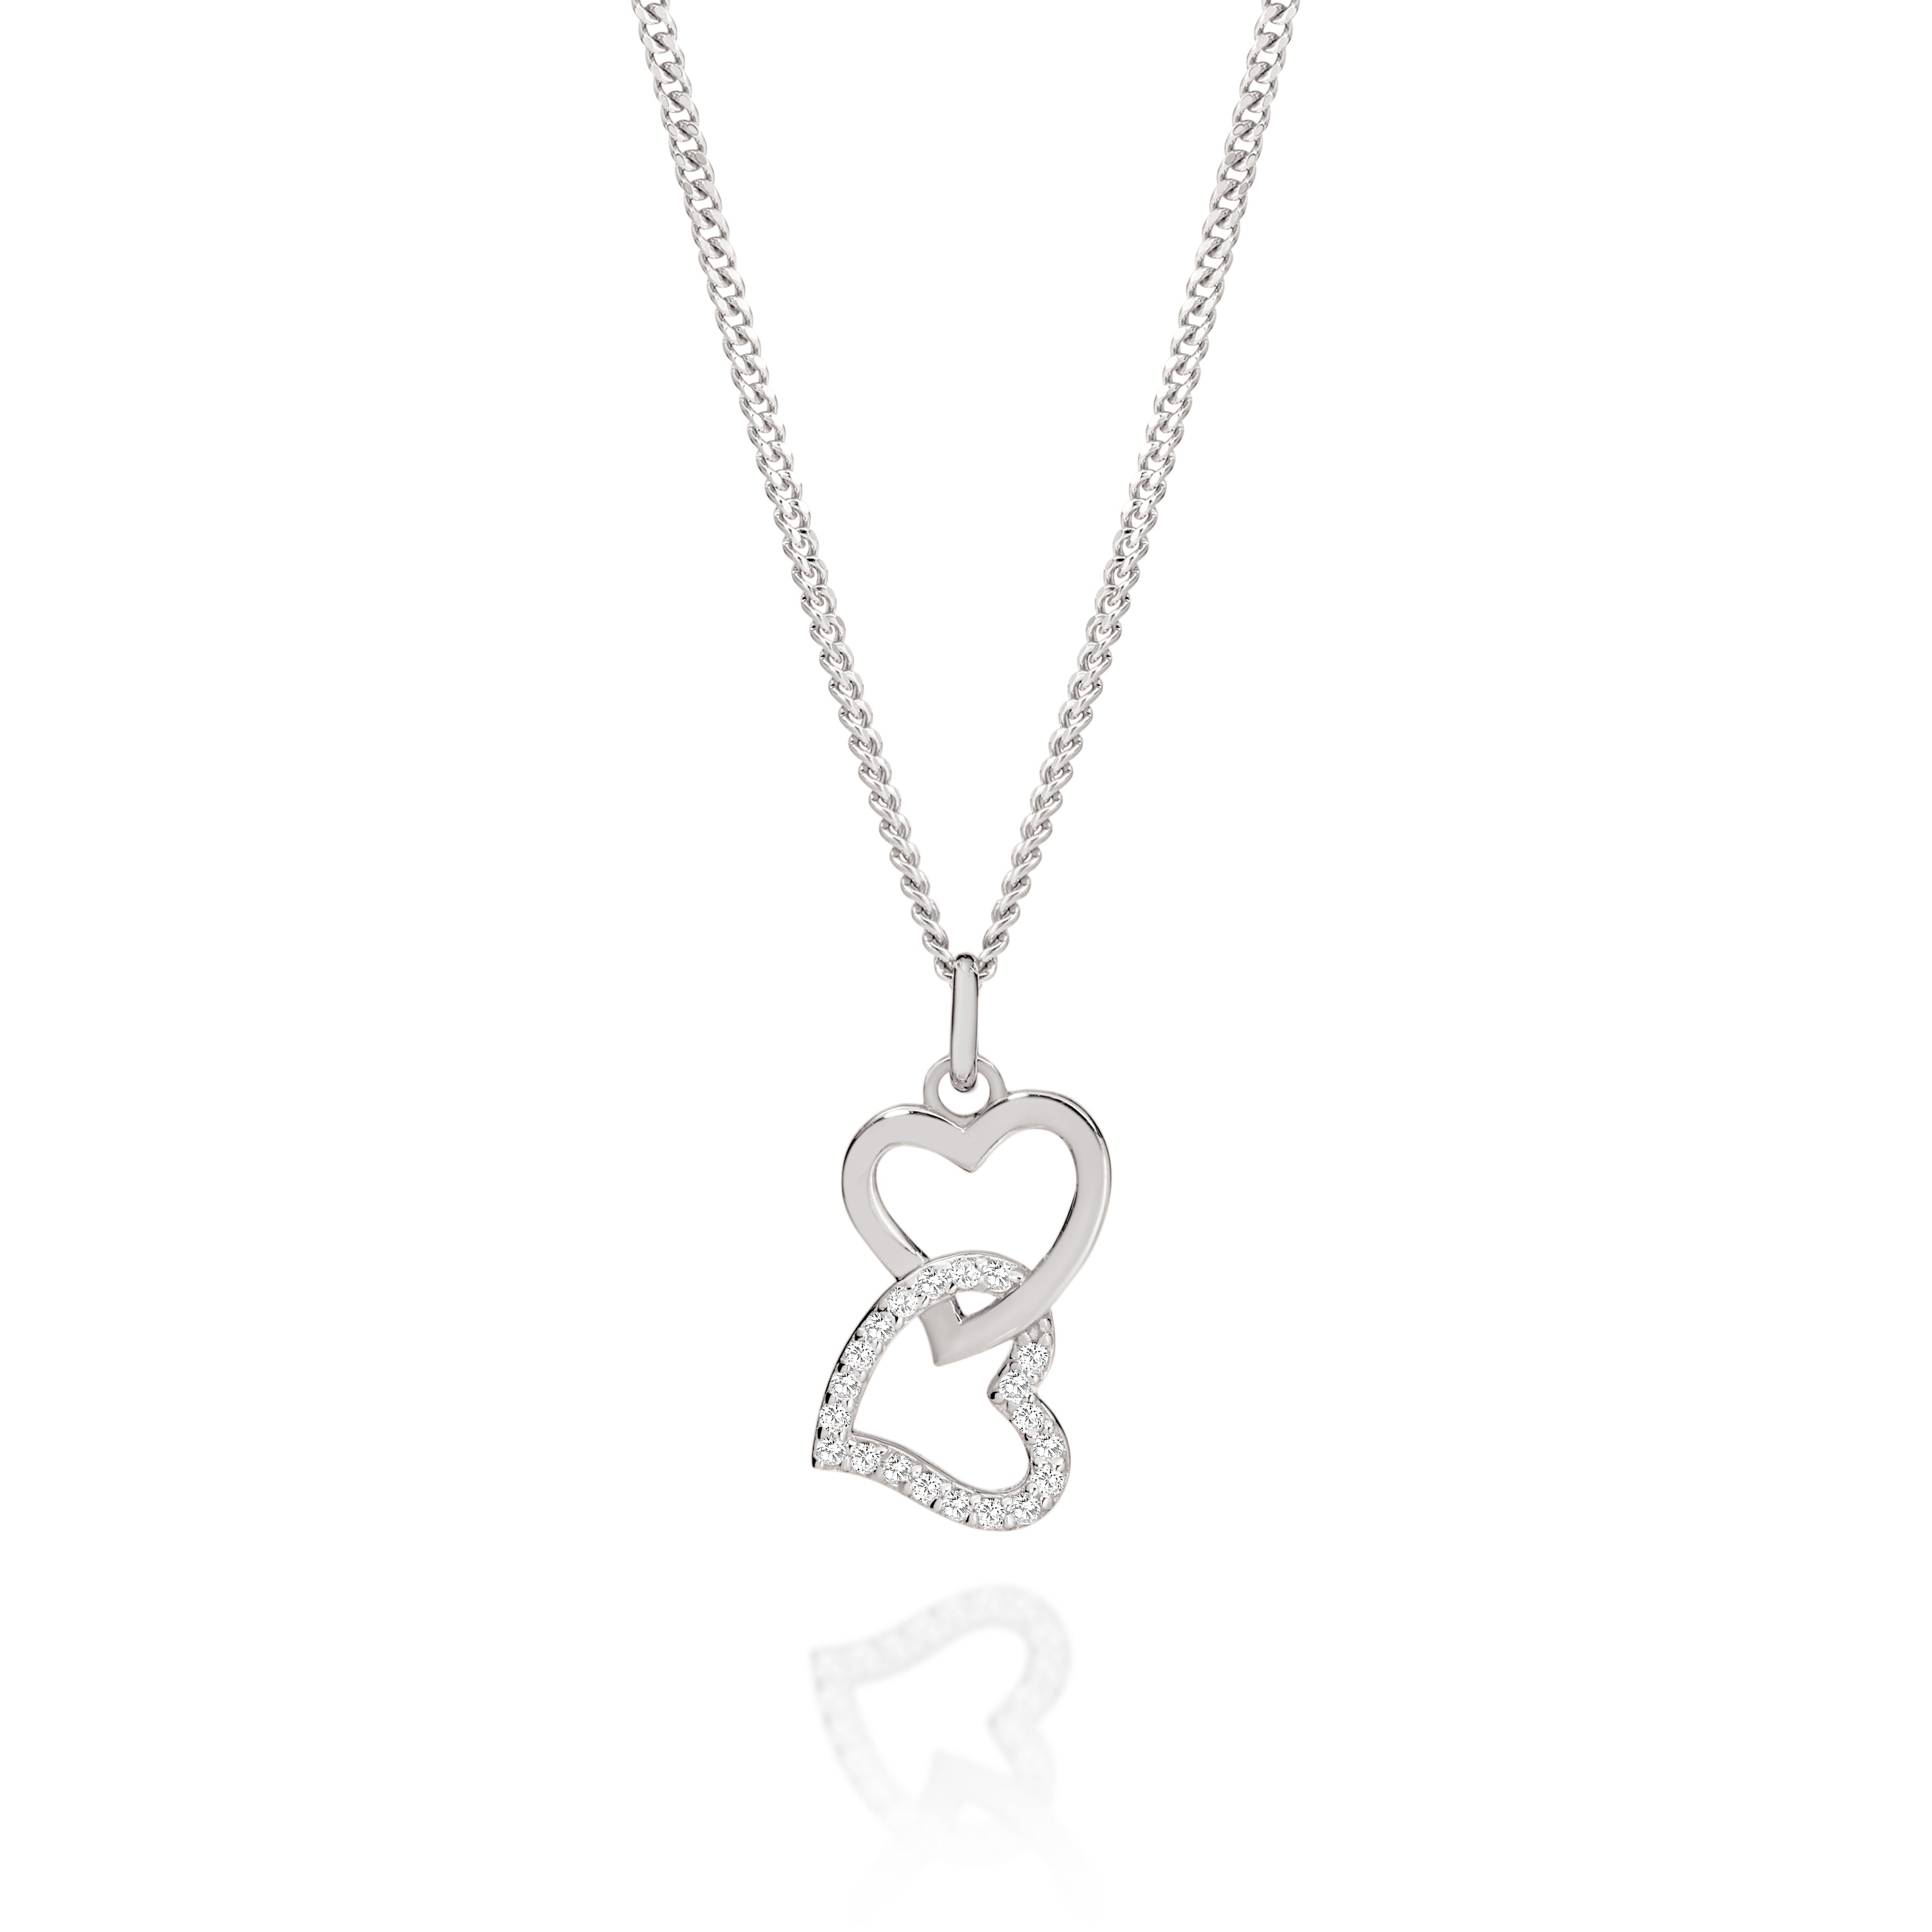 Silver stone set double heart pendant